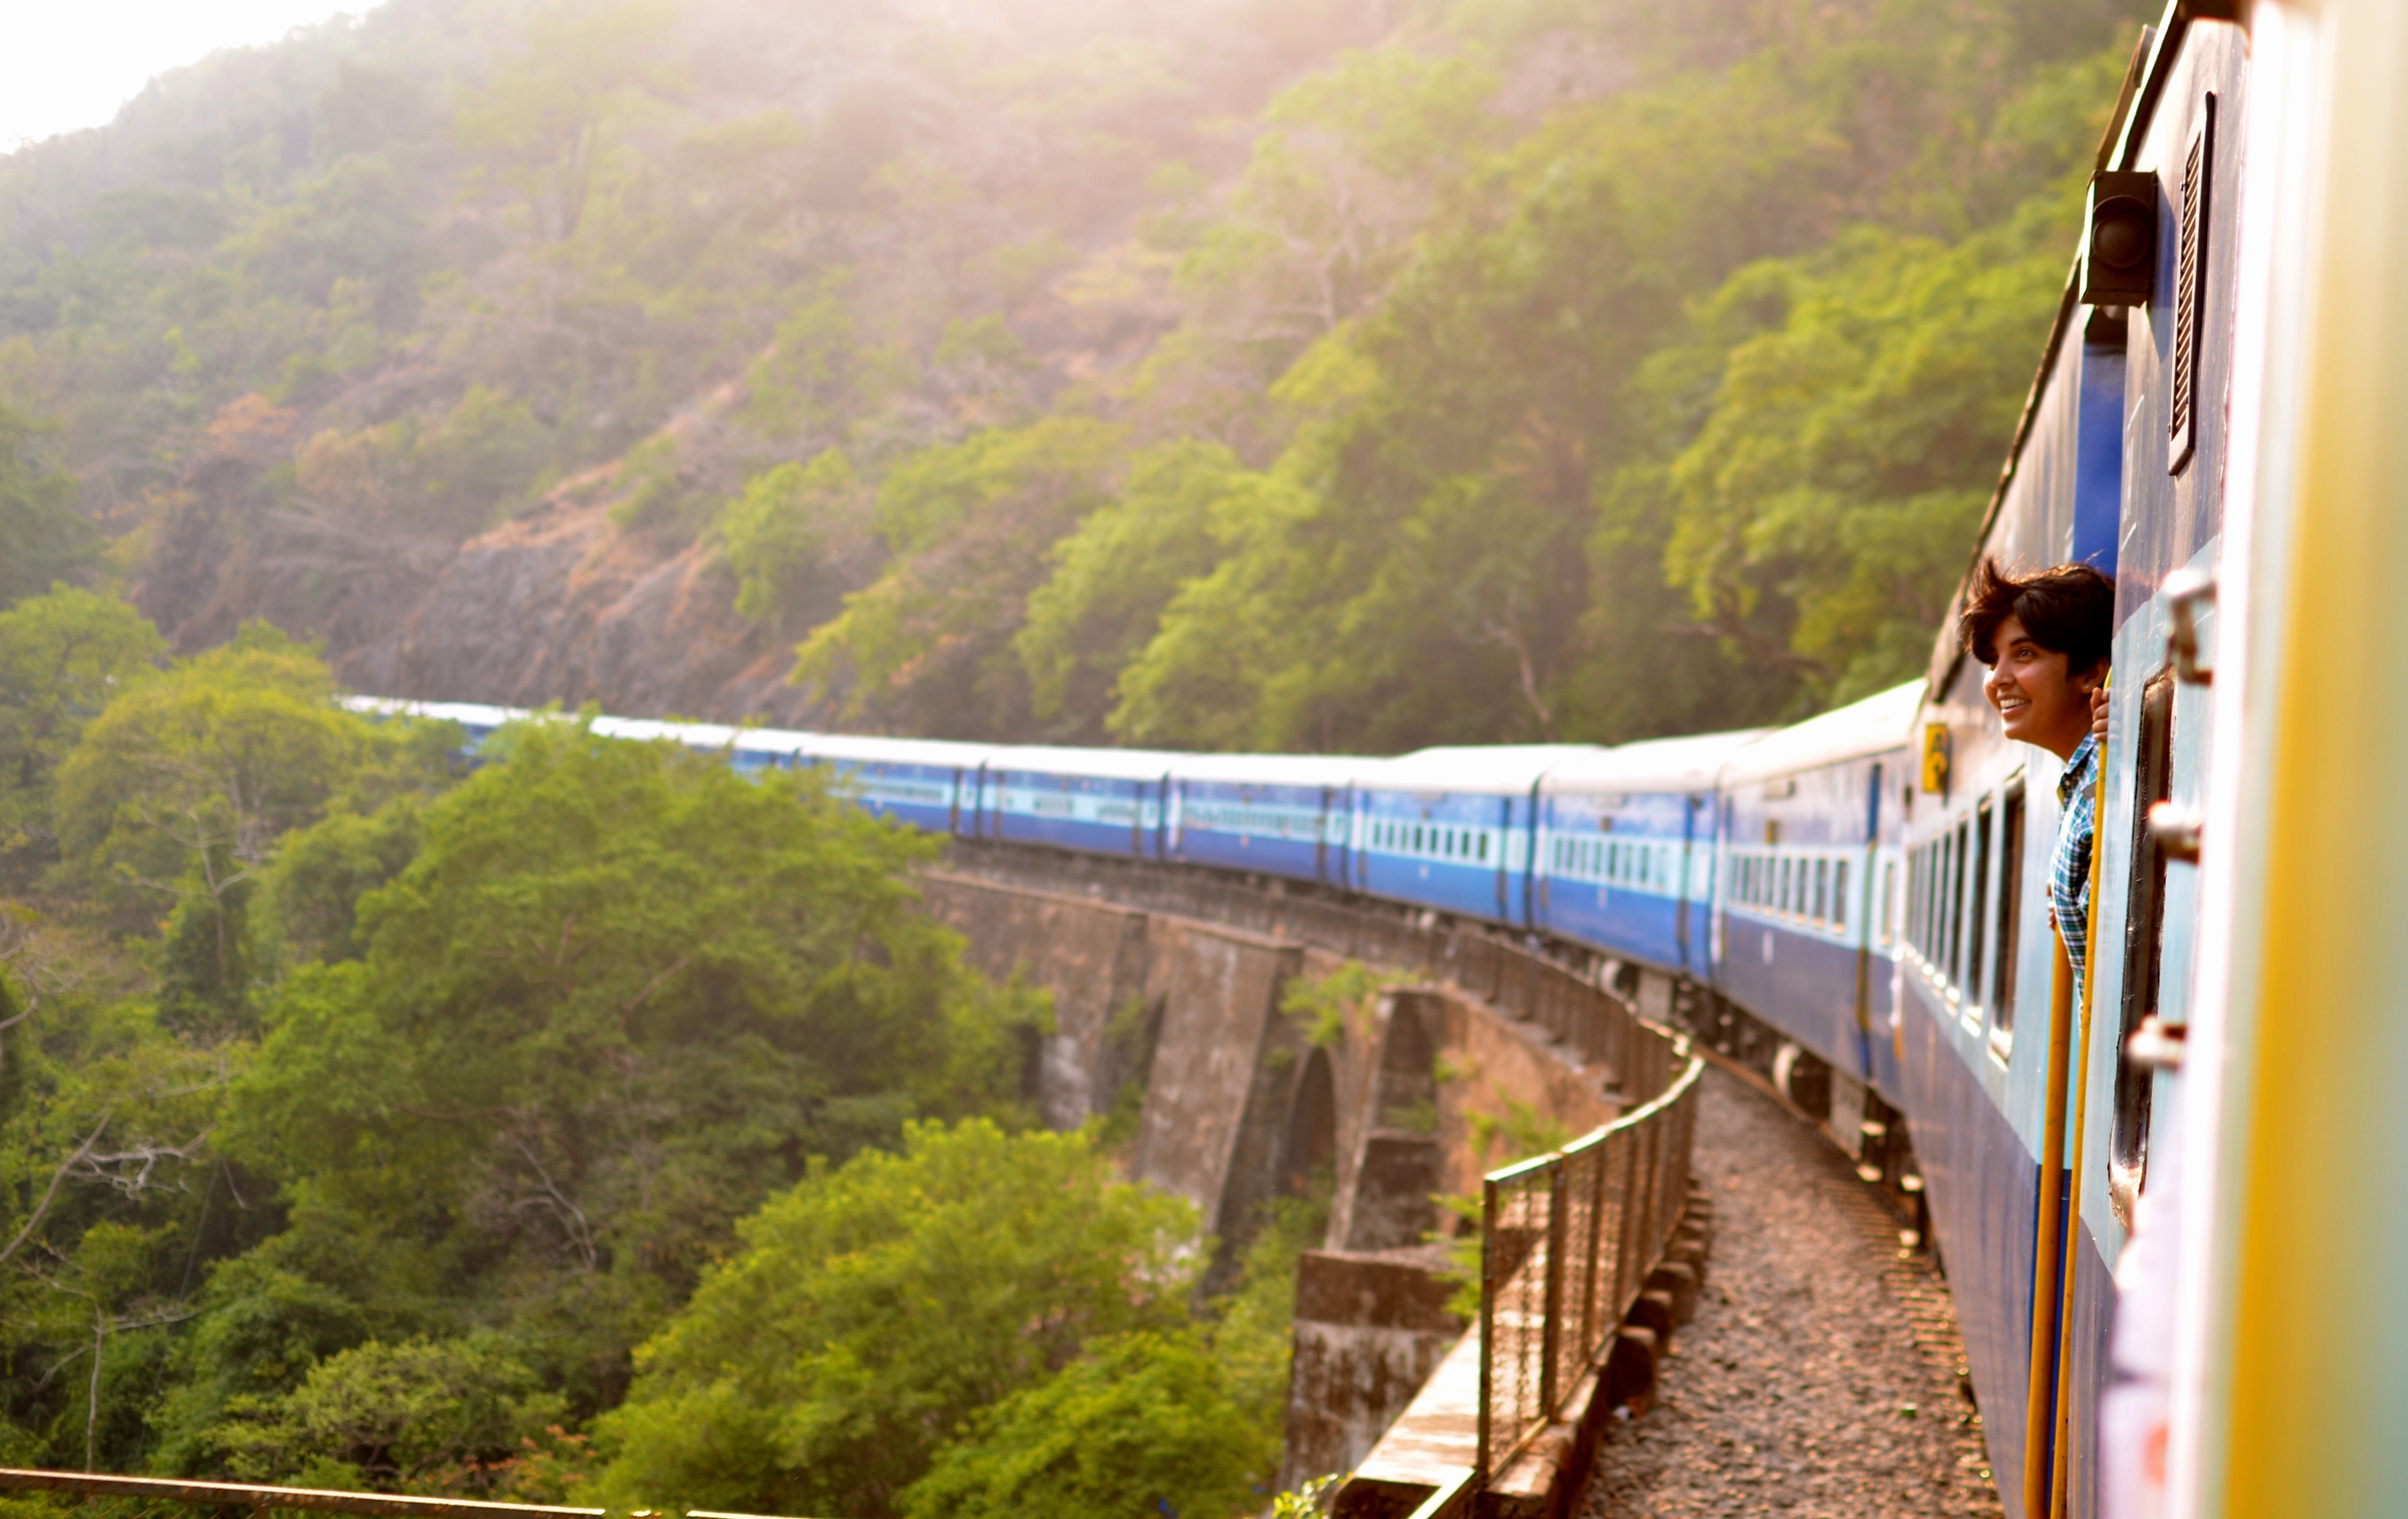 travel through india by train